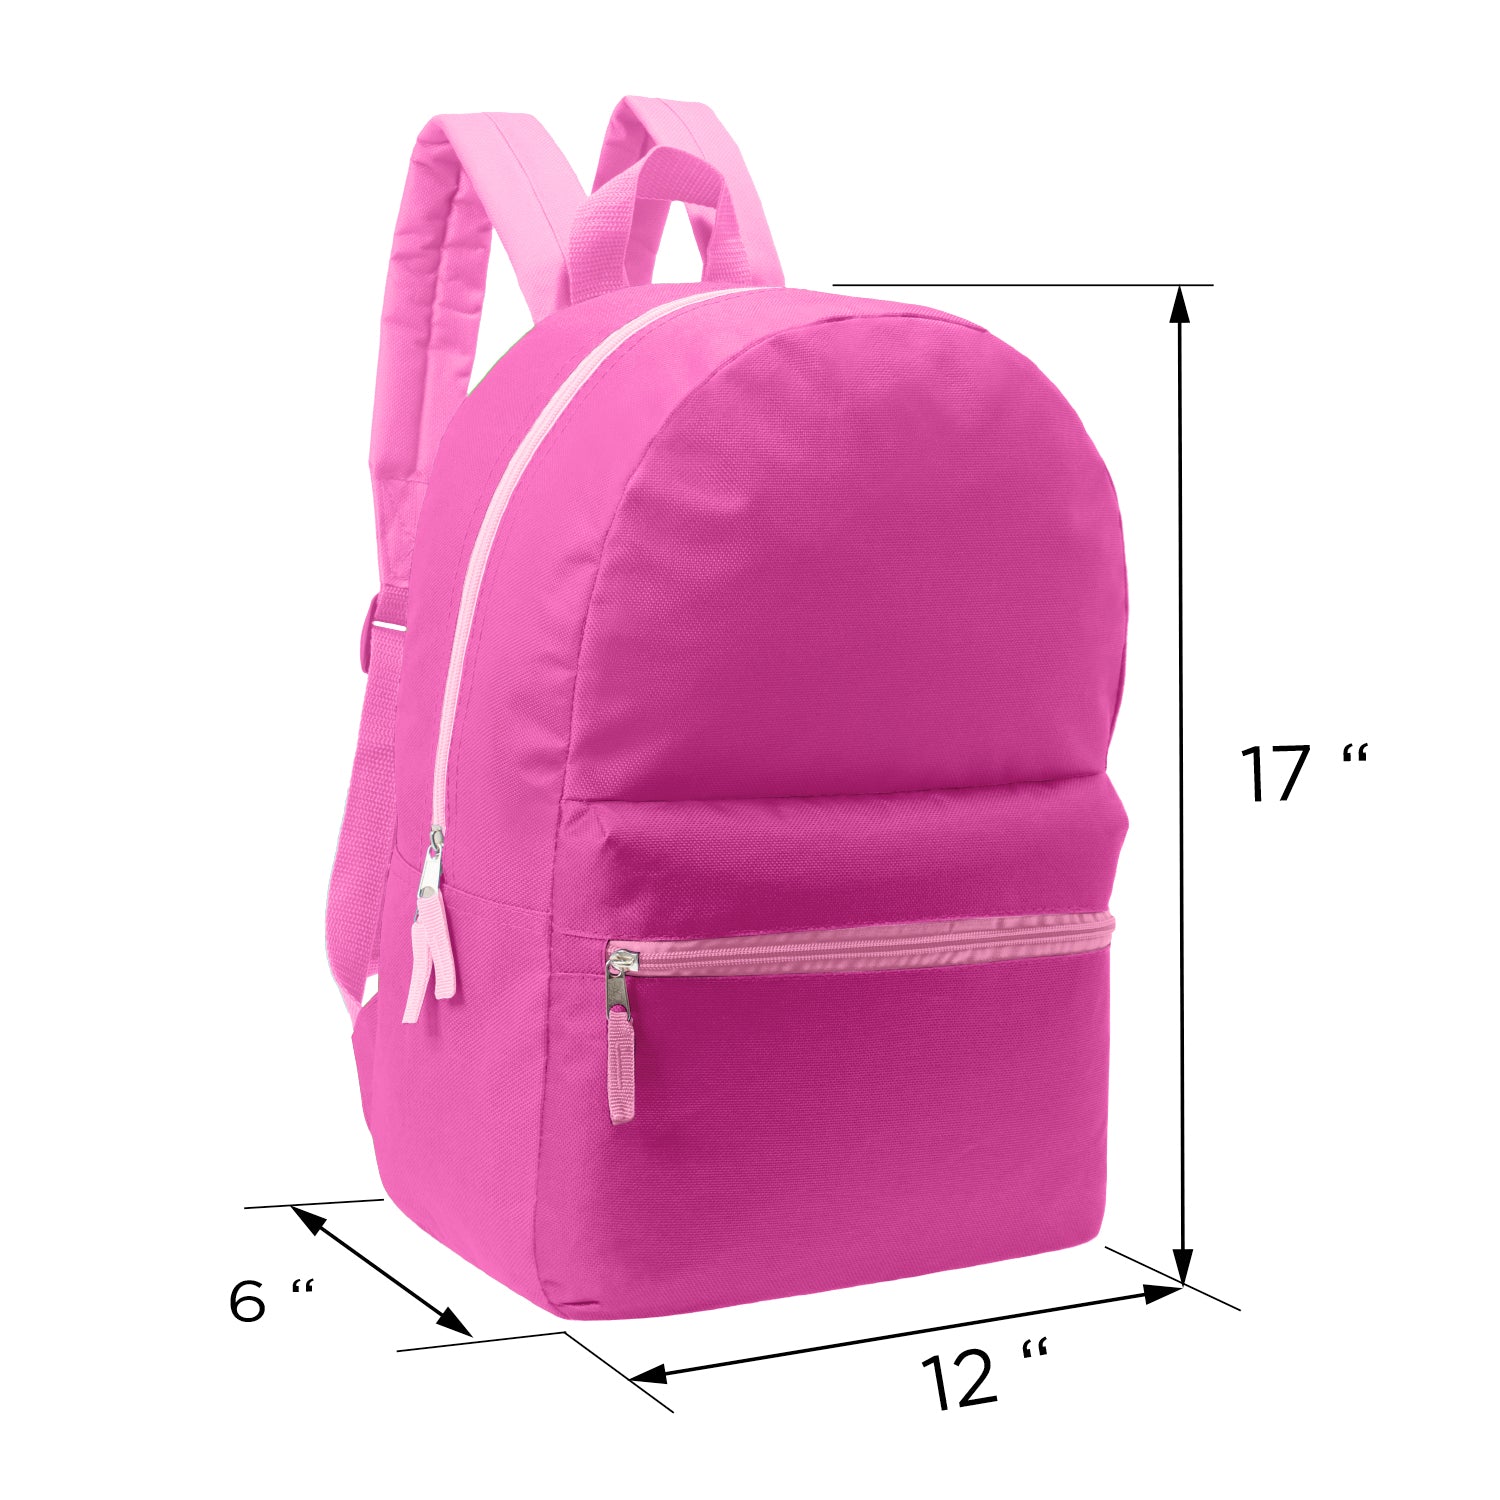 17" Kids Basic Wholesale Backpack in 12 Colors  - Bulk Case of 24 Backpacks